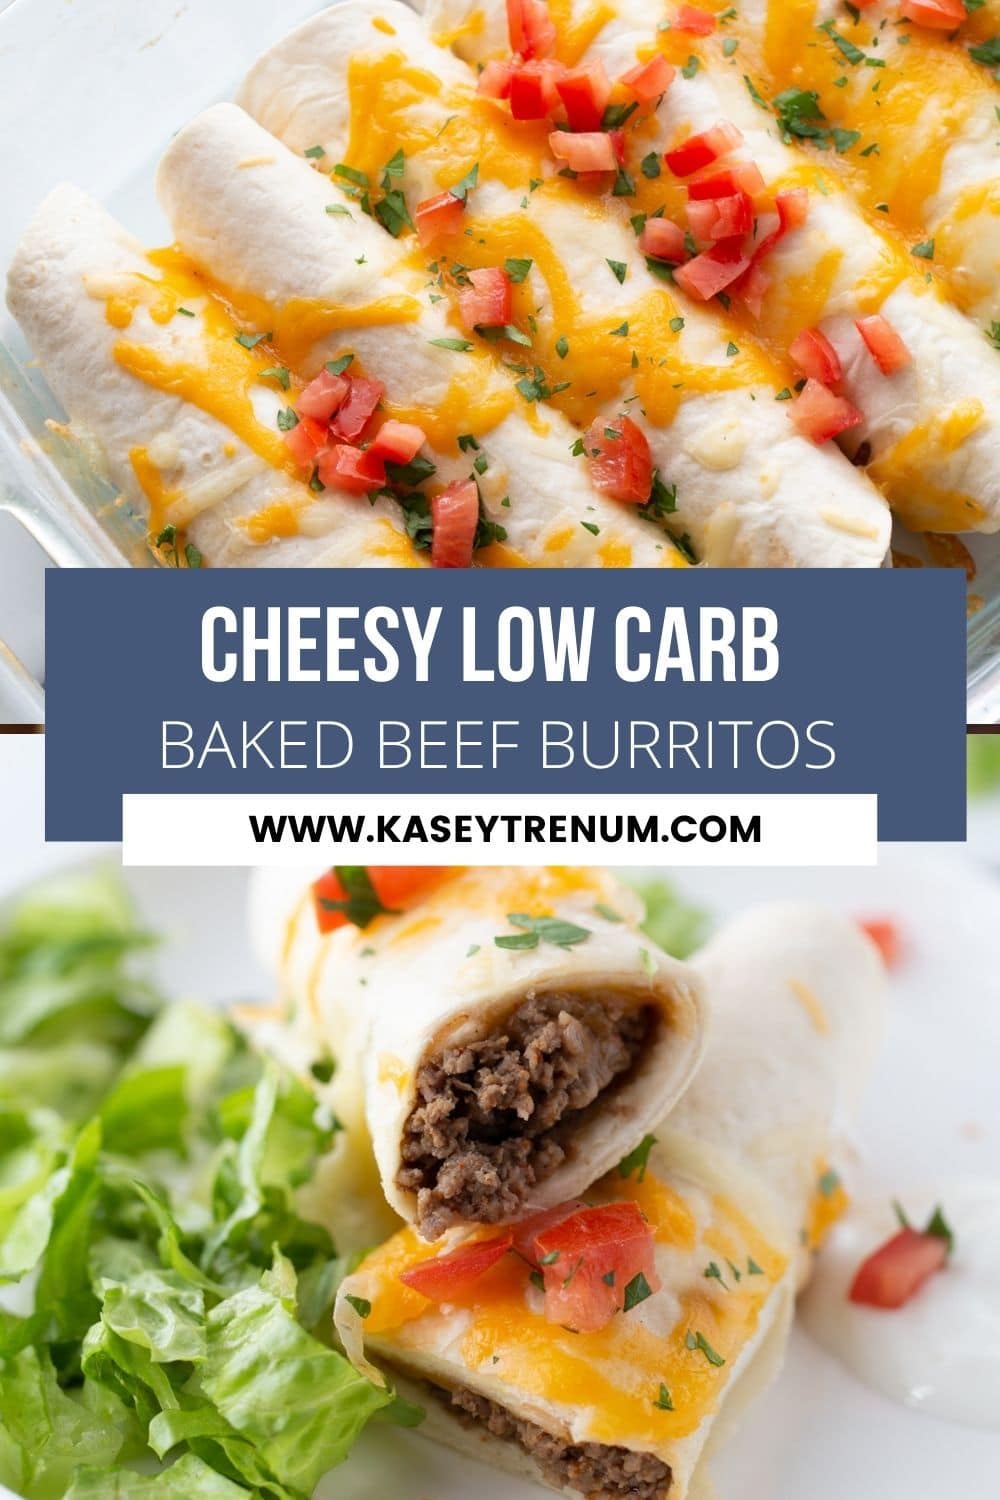 low carb burritos in a collage image